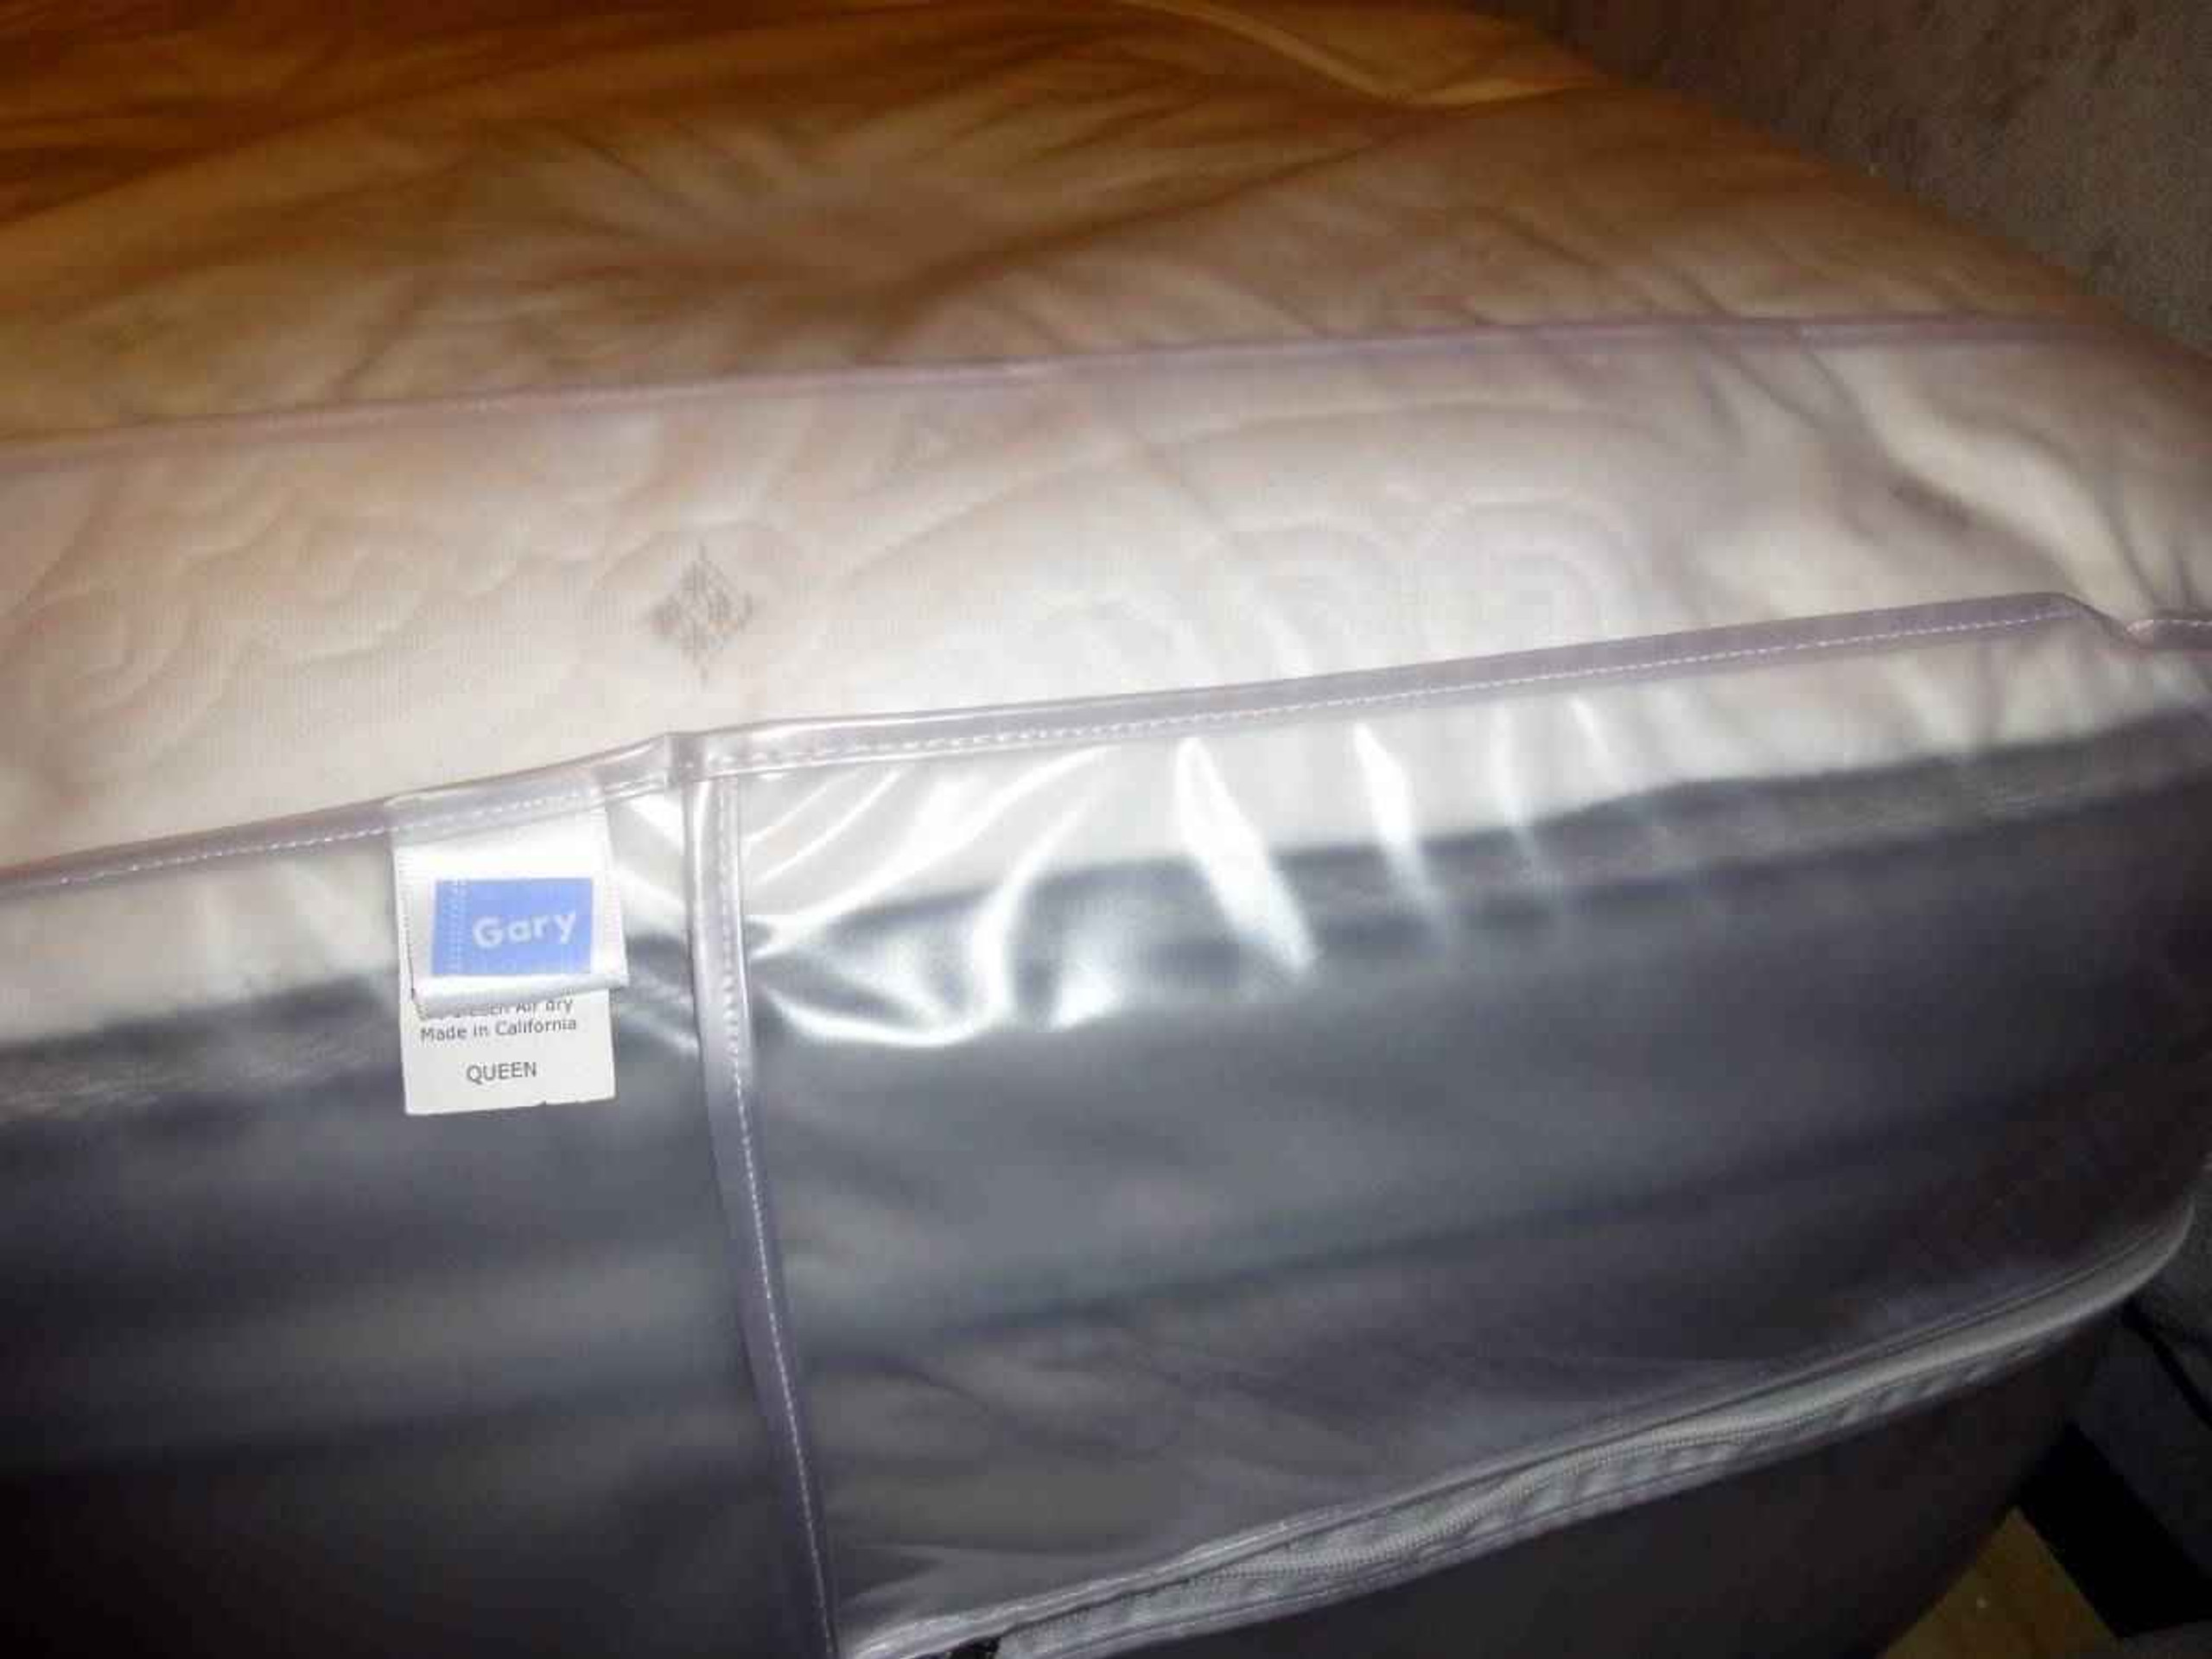 gary heavy duty plastic mattress cover